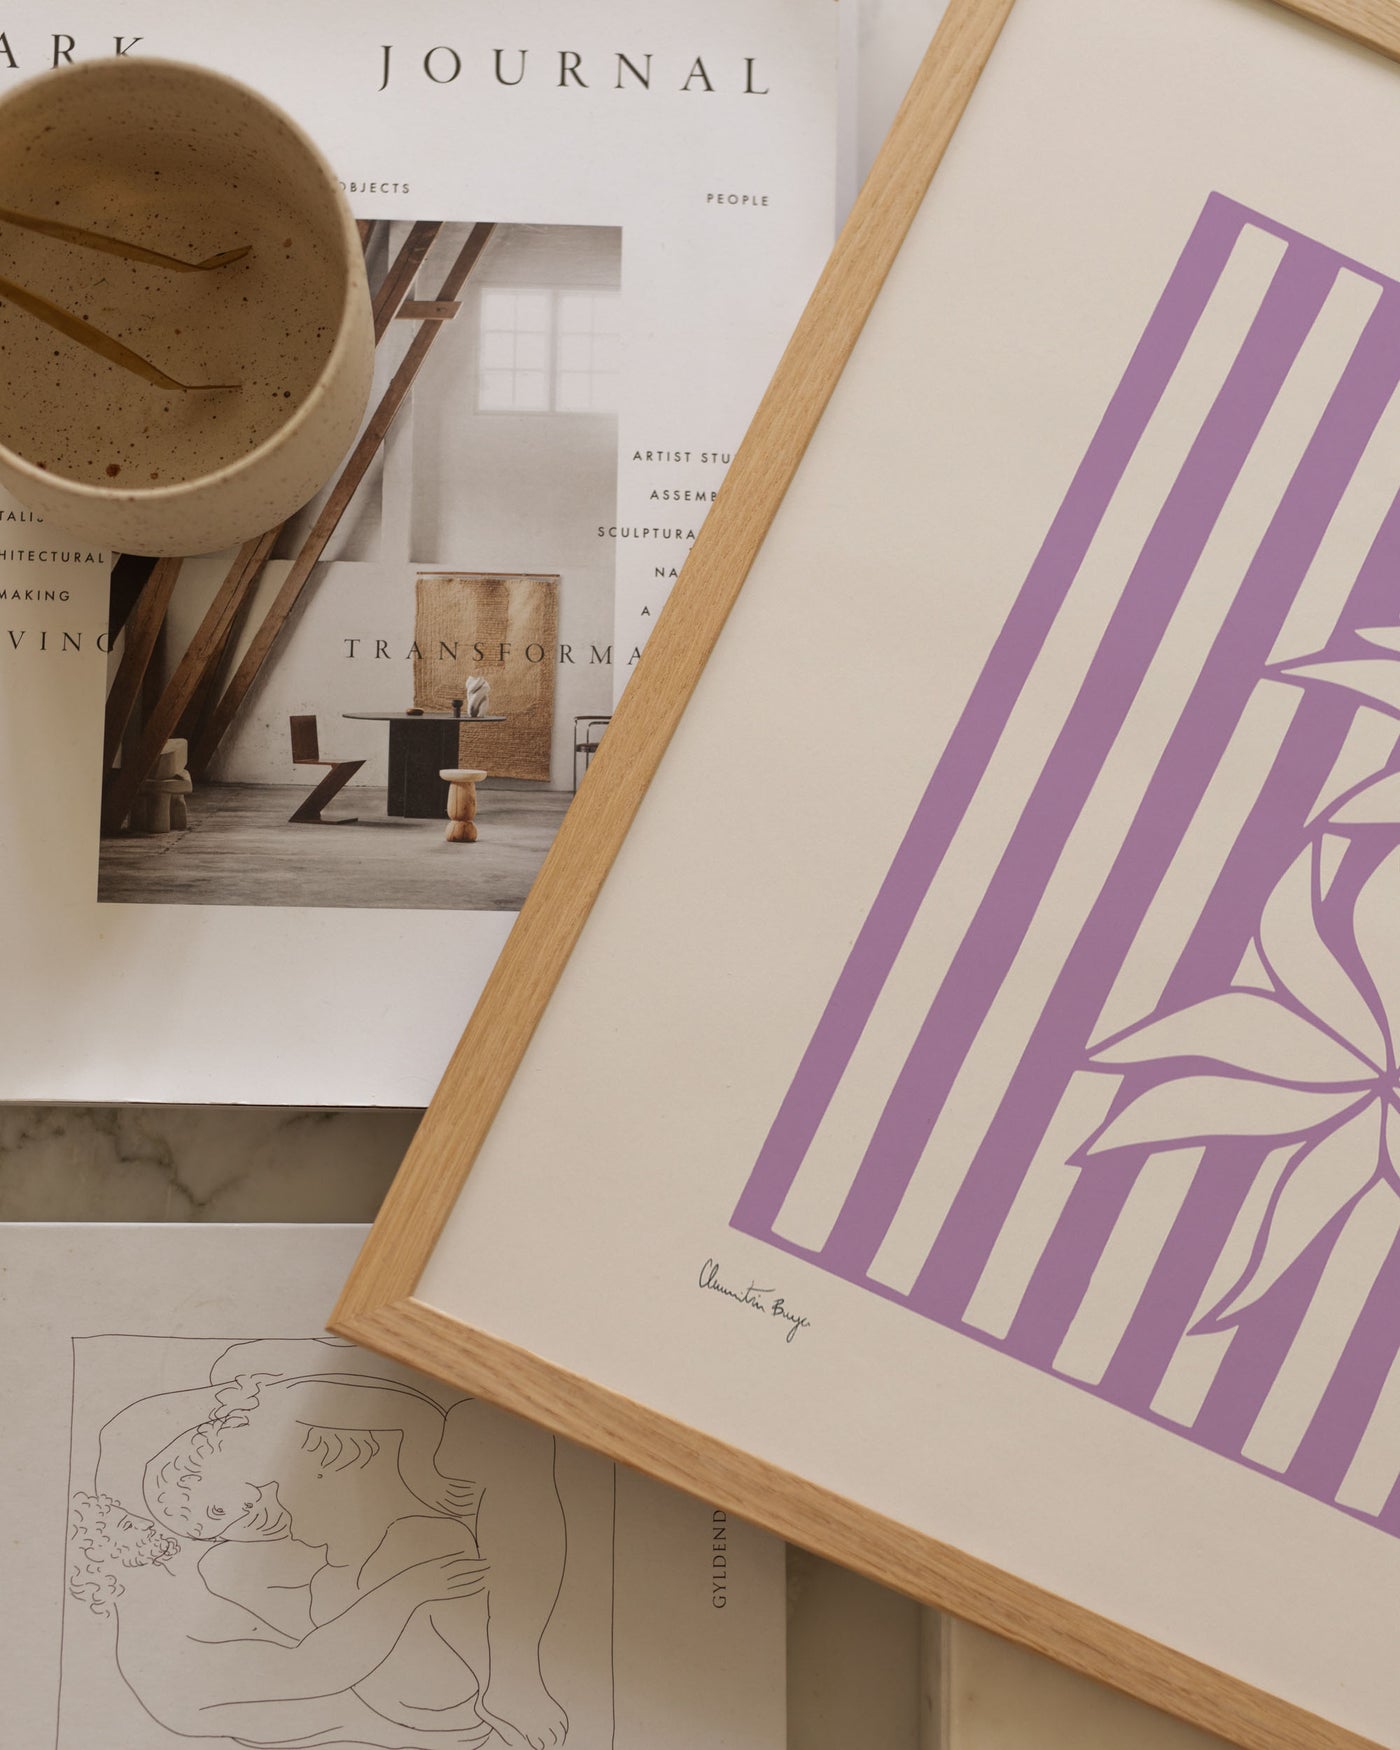 Papercut 09 - Lilac